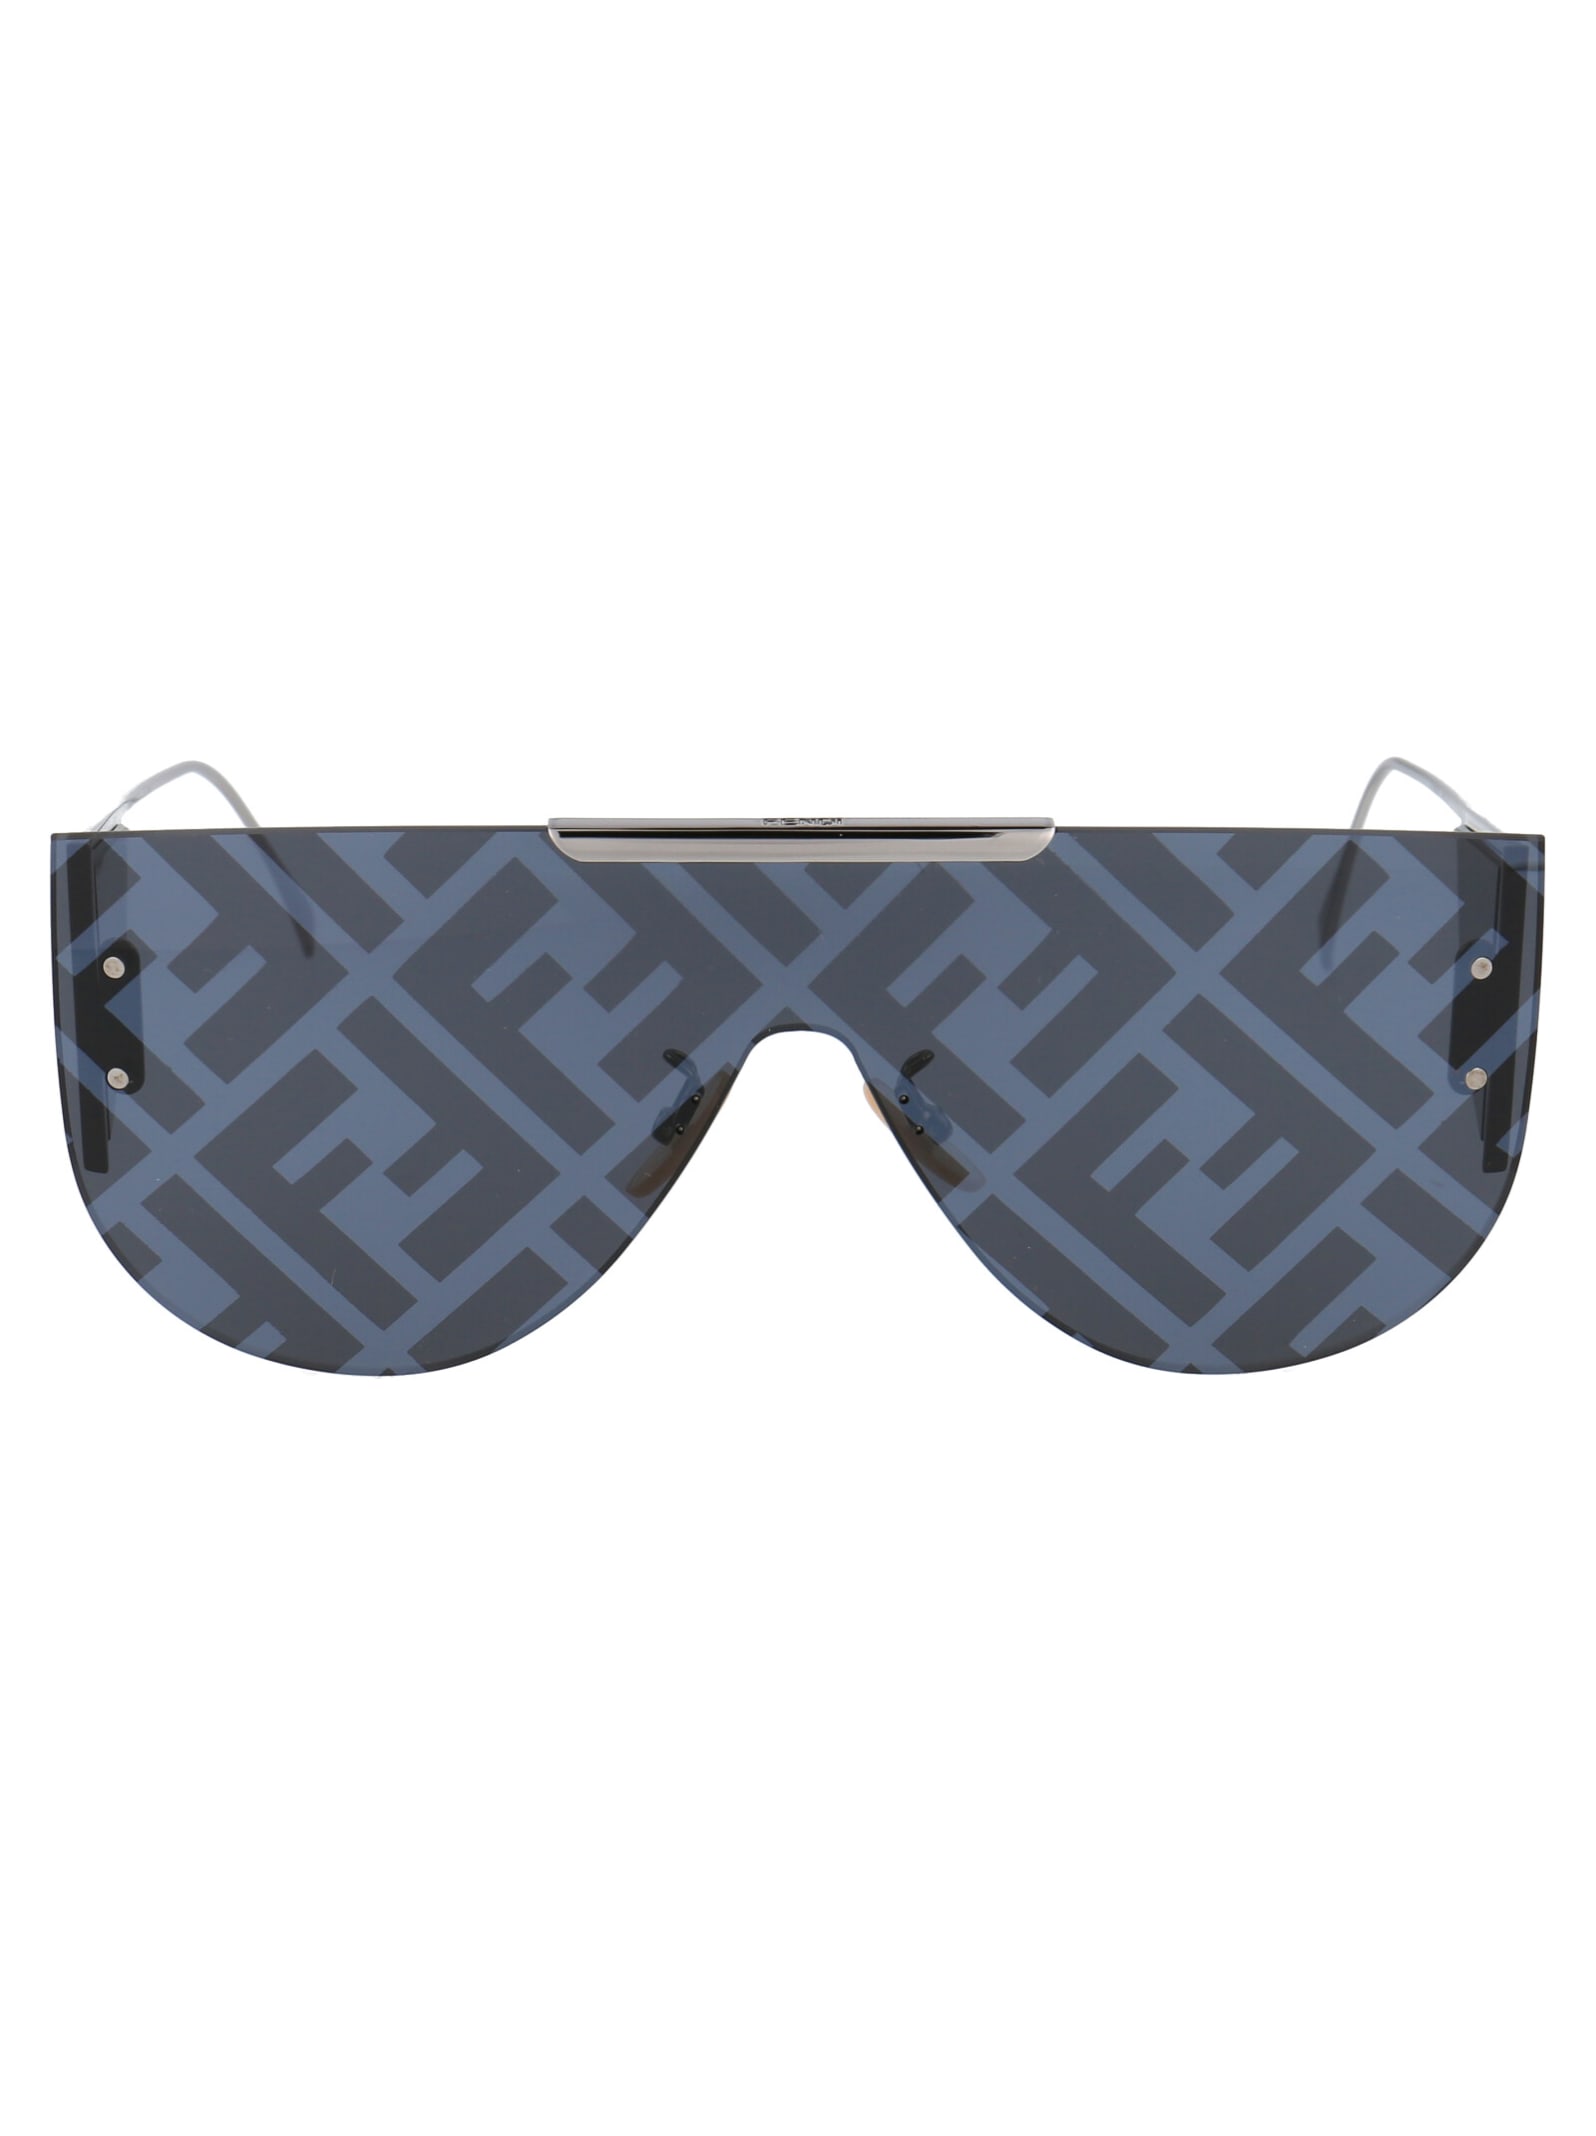 Fendi Men's Blue Metal Sunglasses